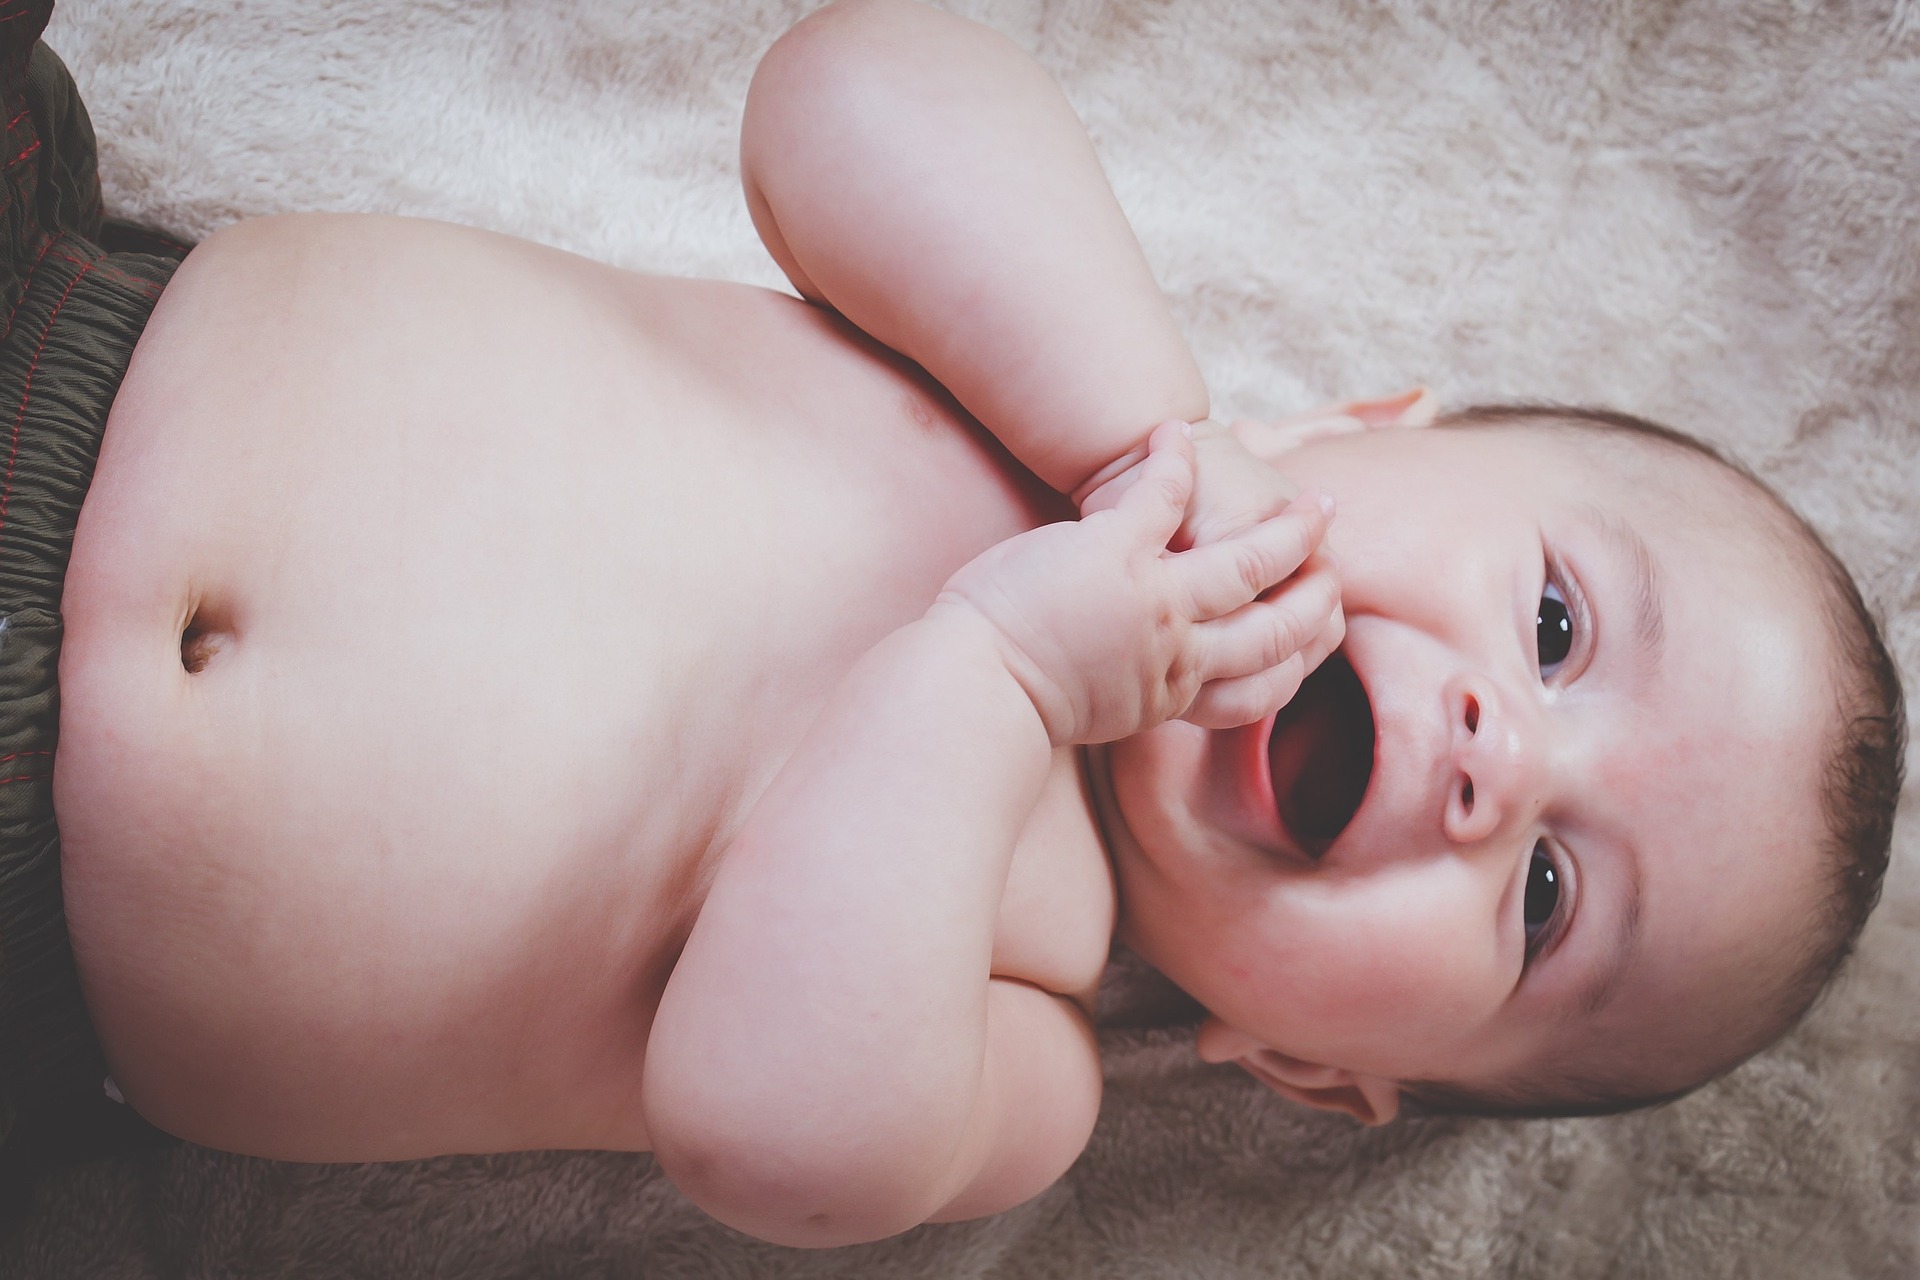 Cum sa faci masajul bebelusului - sfatulparintilor.ro - pixabay_com - baby-2692199_1920